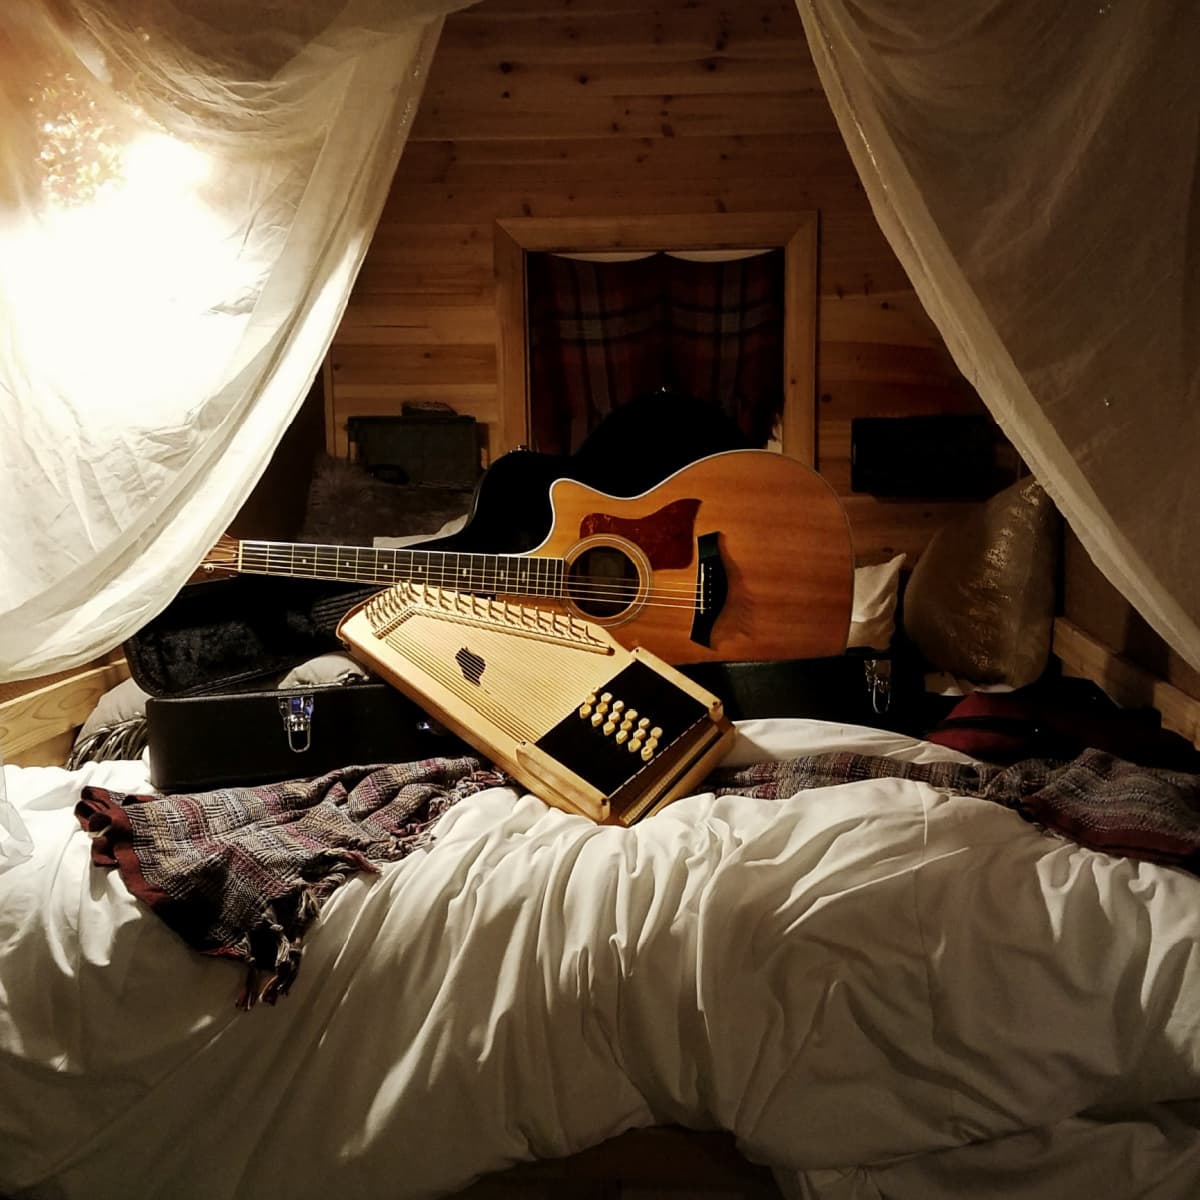 Autoharp and guitar in boho tiny home.